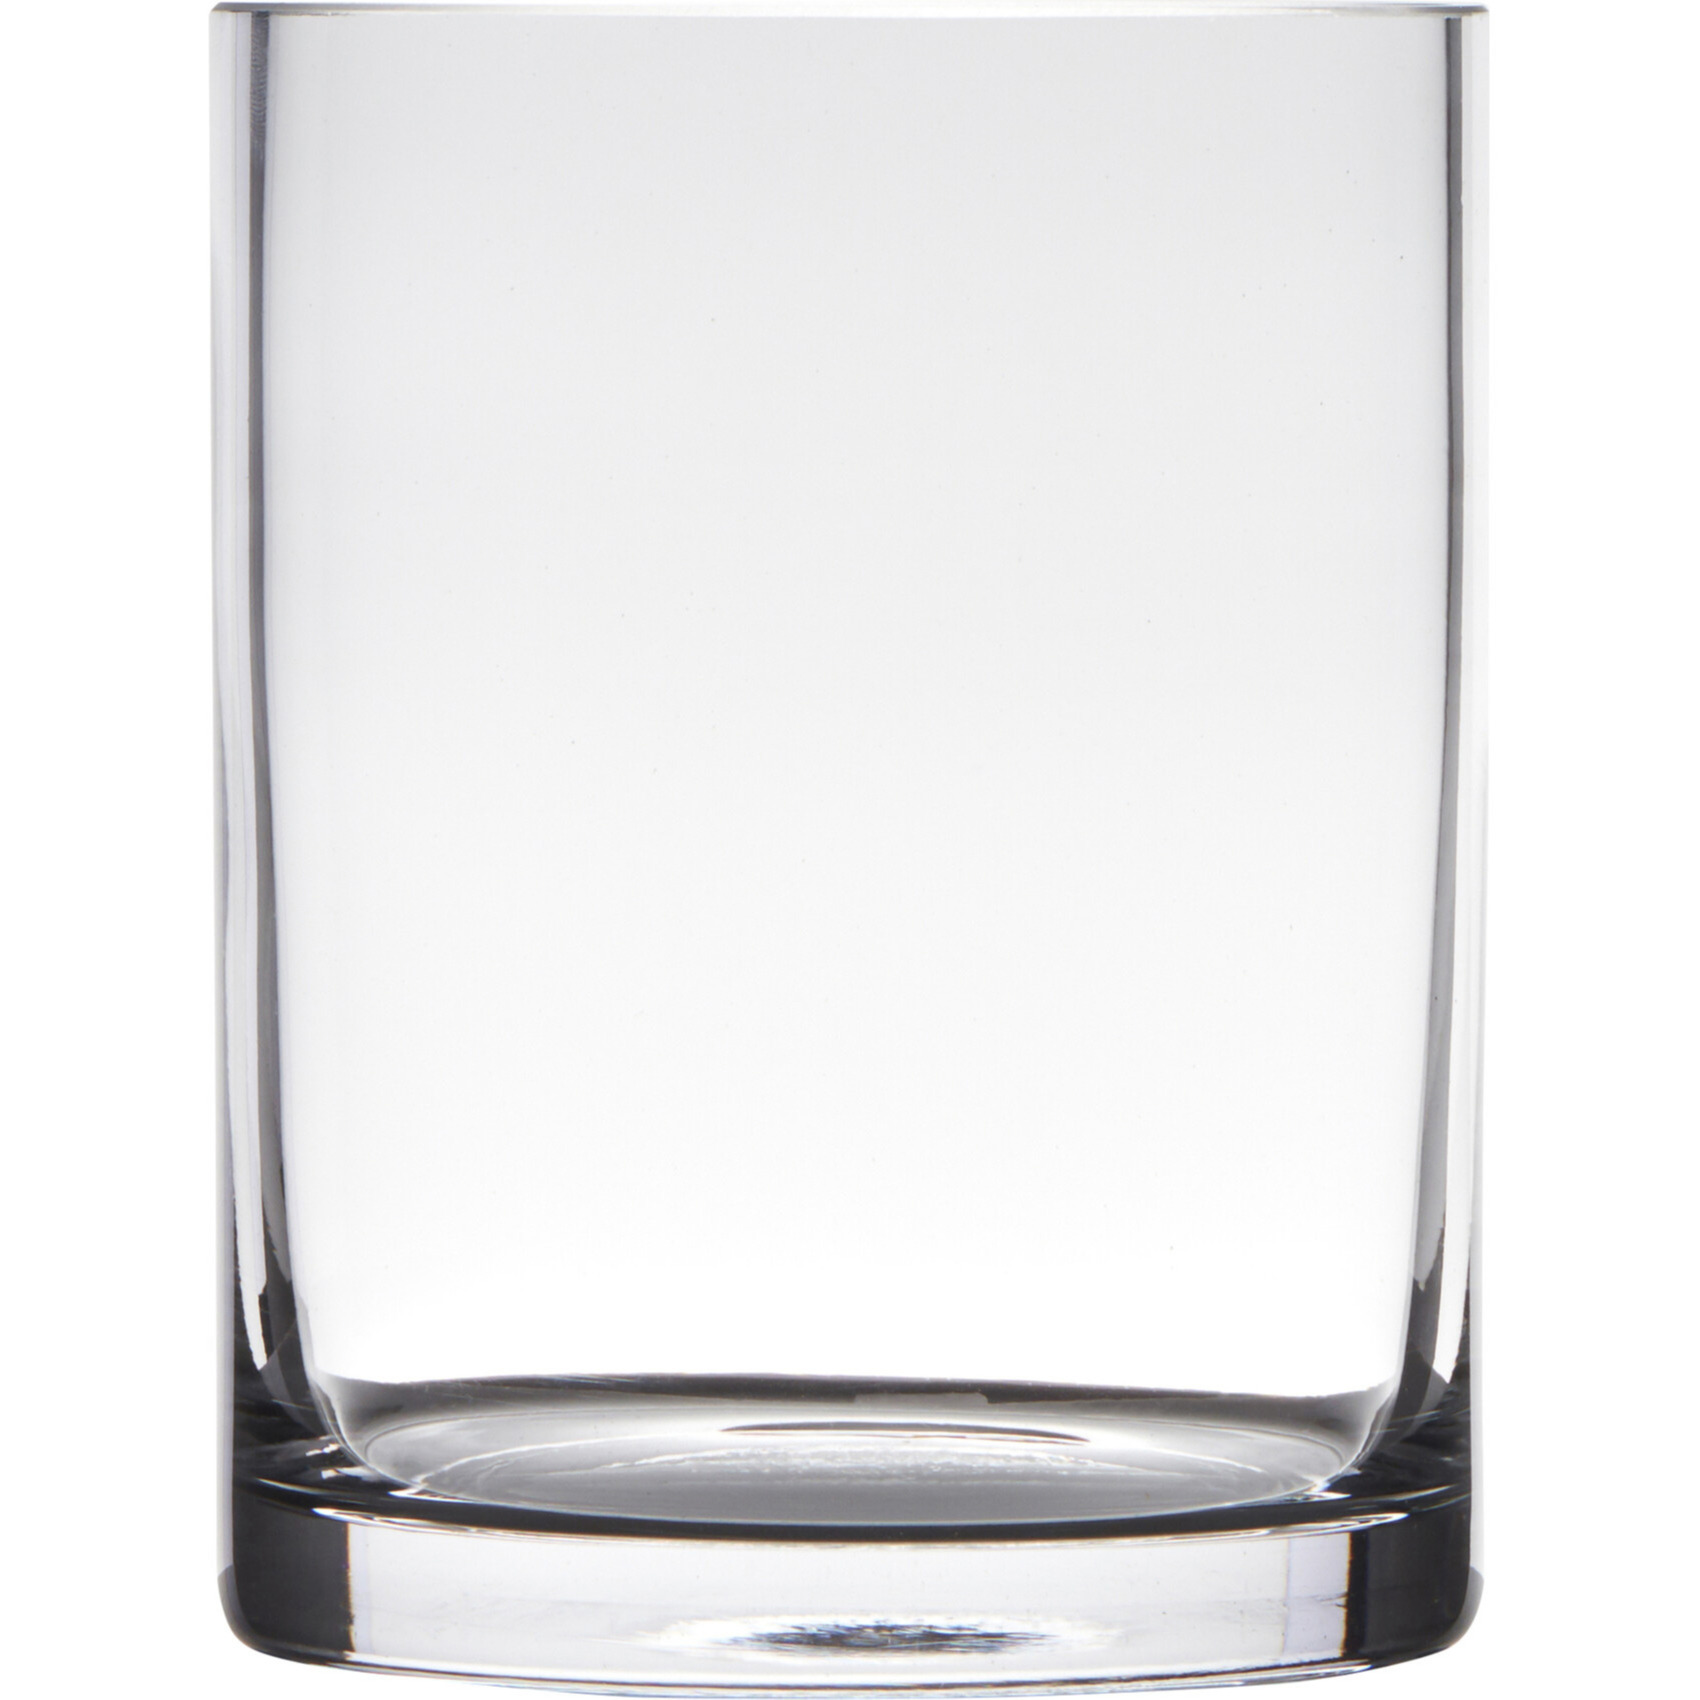 Hakbijl Glass Transparante home-basics cylinder vorm vaas/vazen van glas 15 x 12 cm -